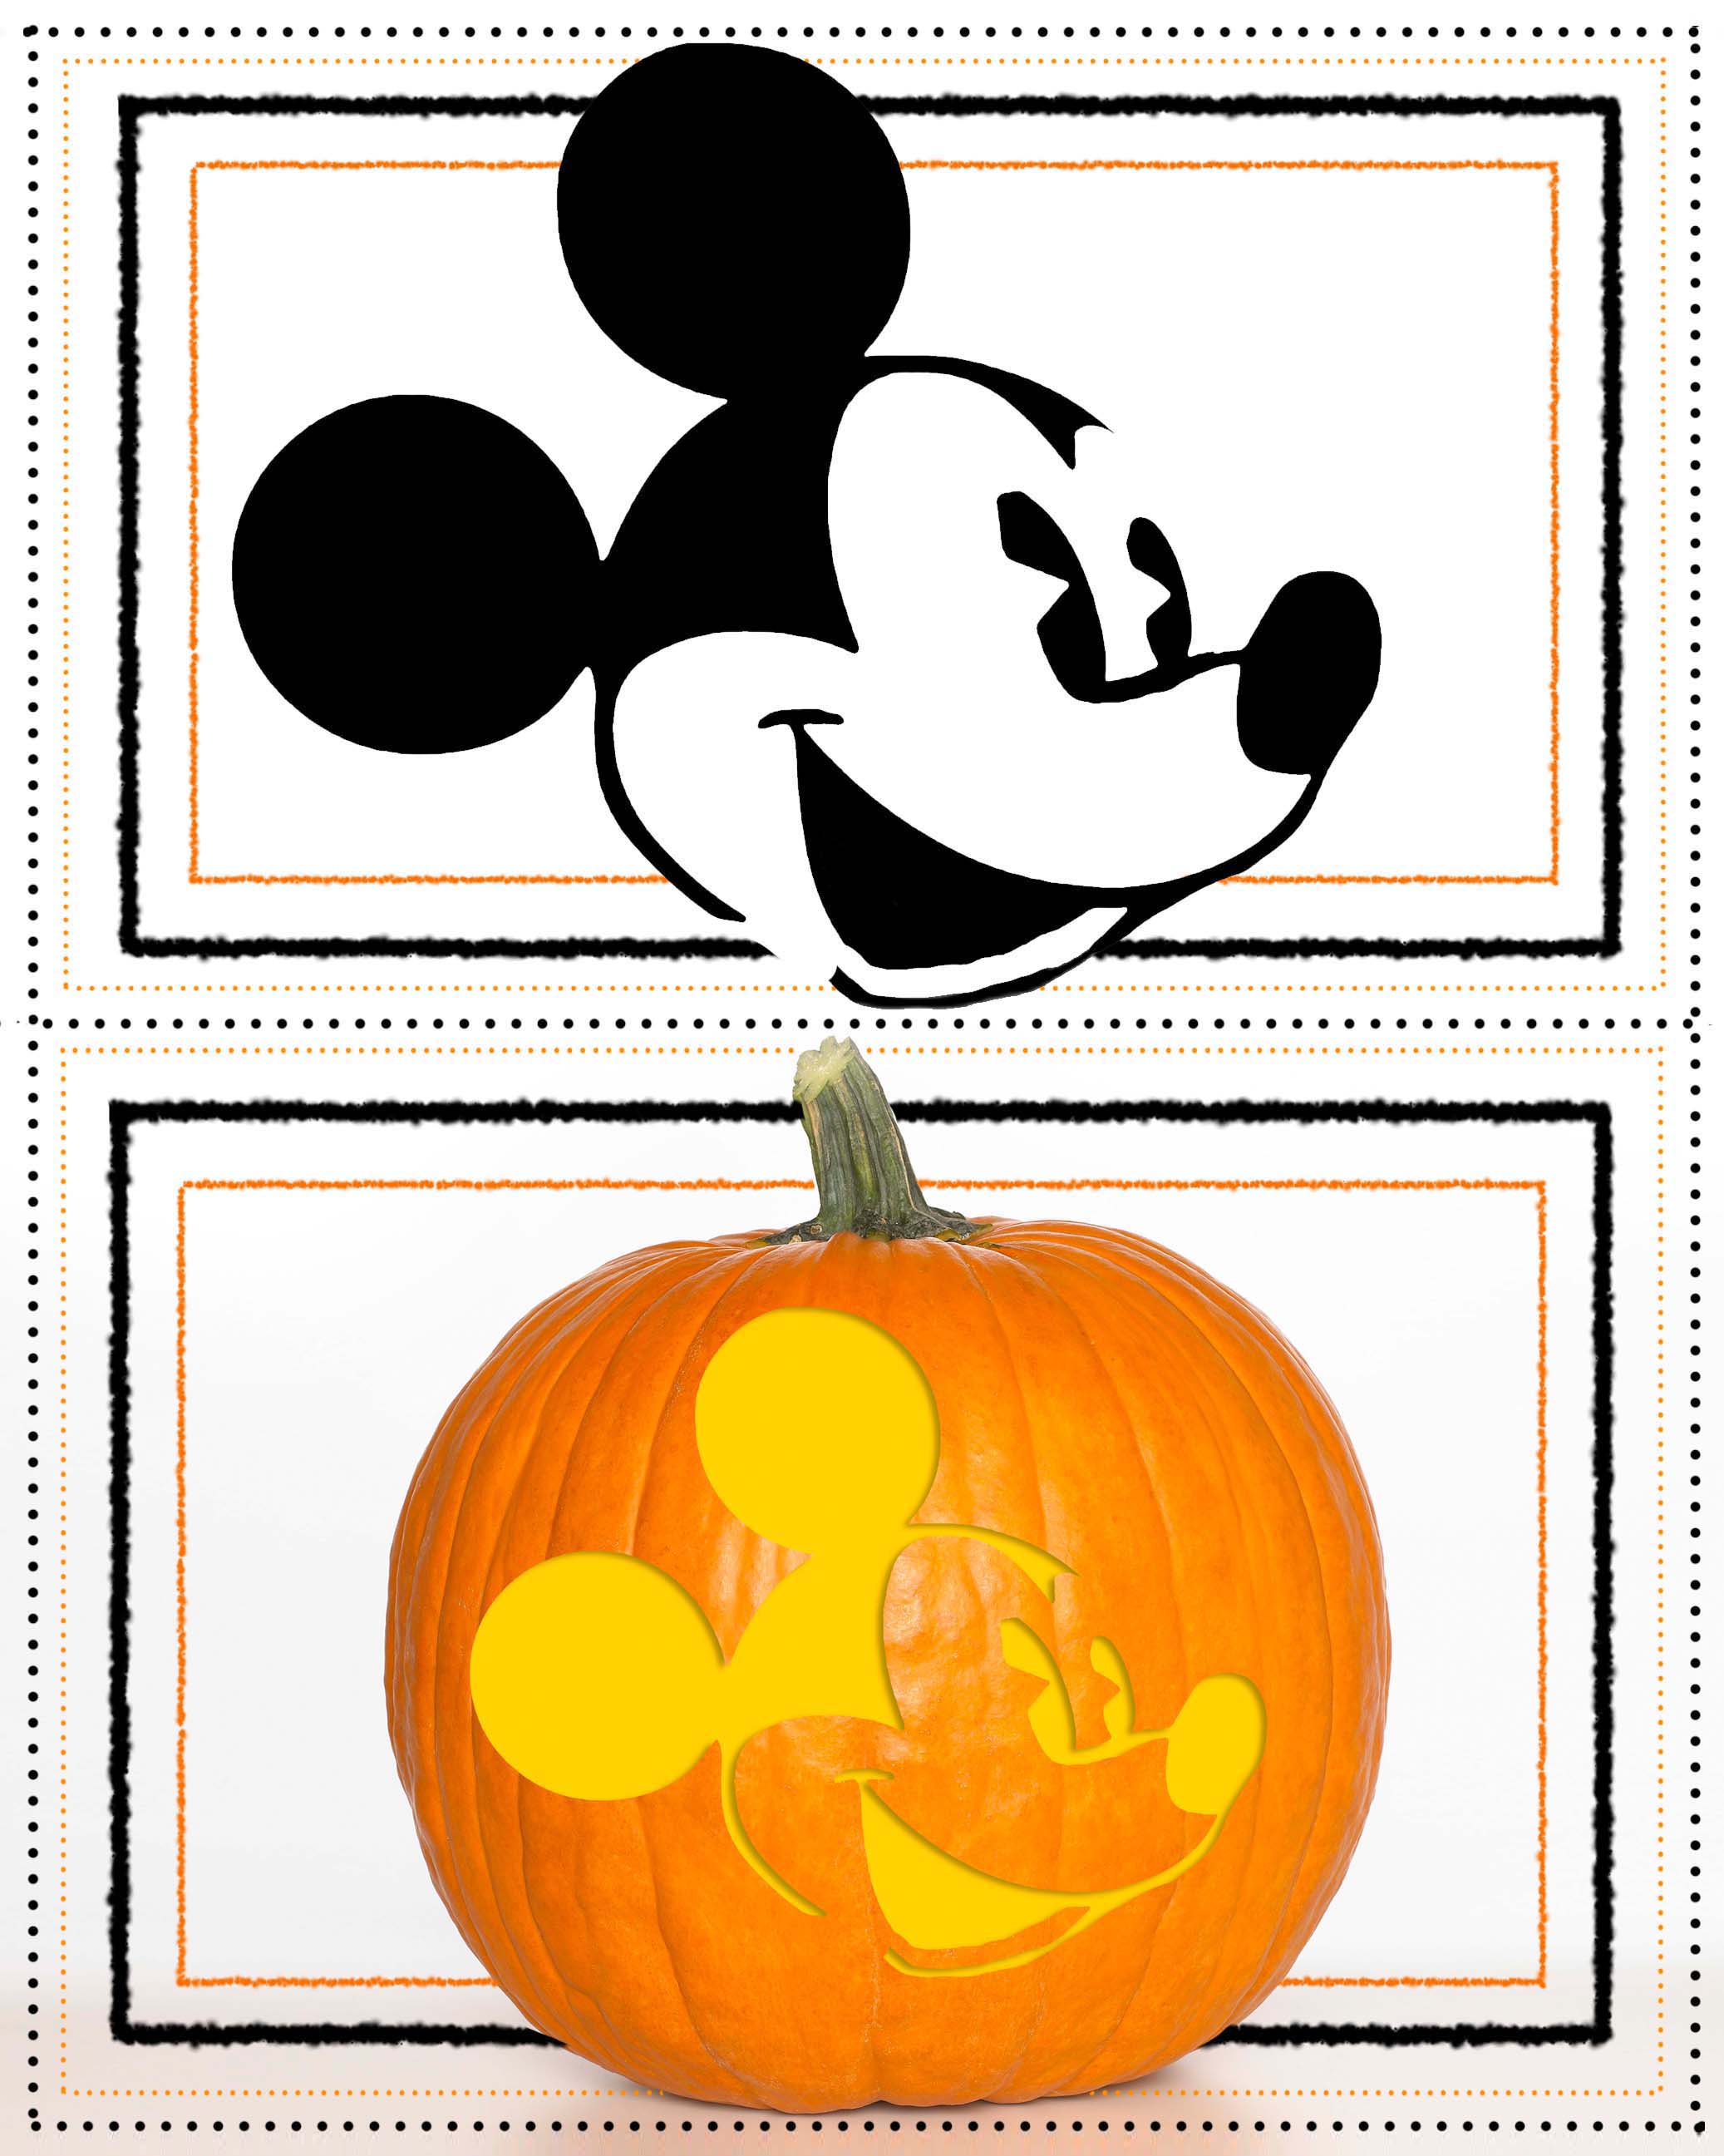 Free Pumpkin Stencils Pop Culture Designs For Your Jack O Lantern